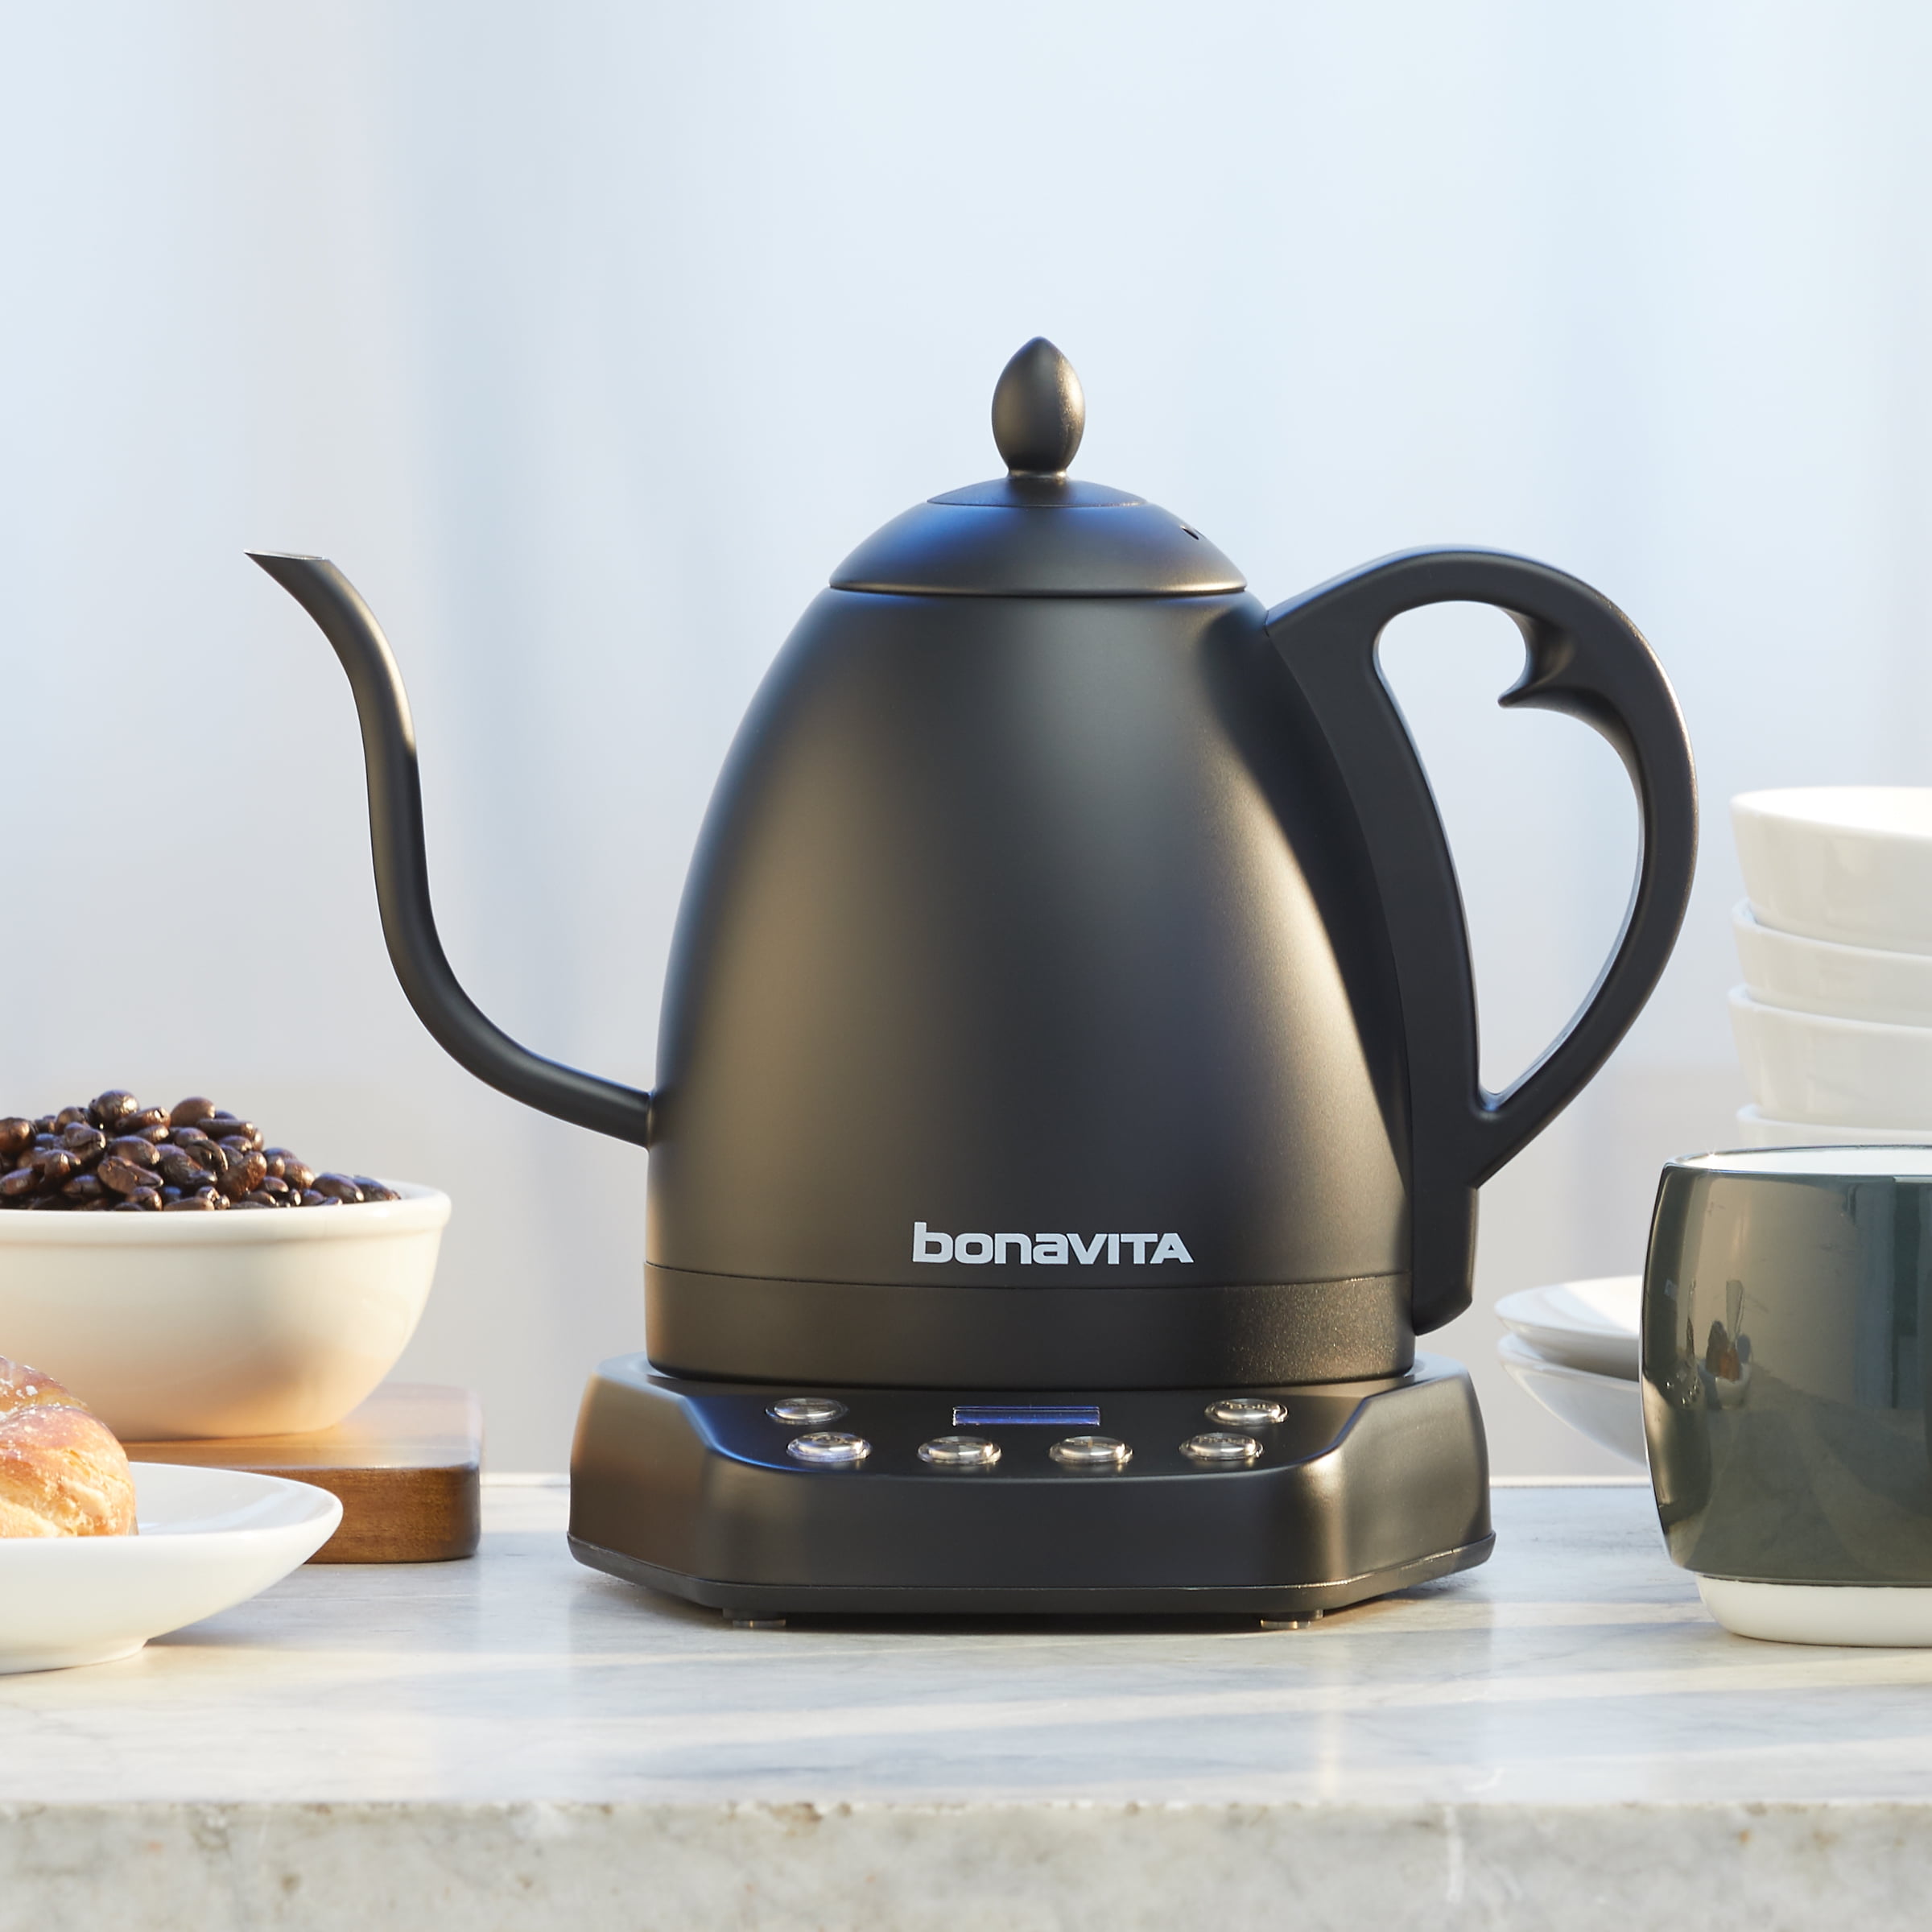 Bonavita electric kettle - Bivouac café biologique